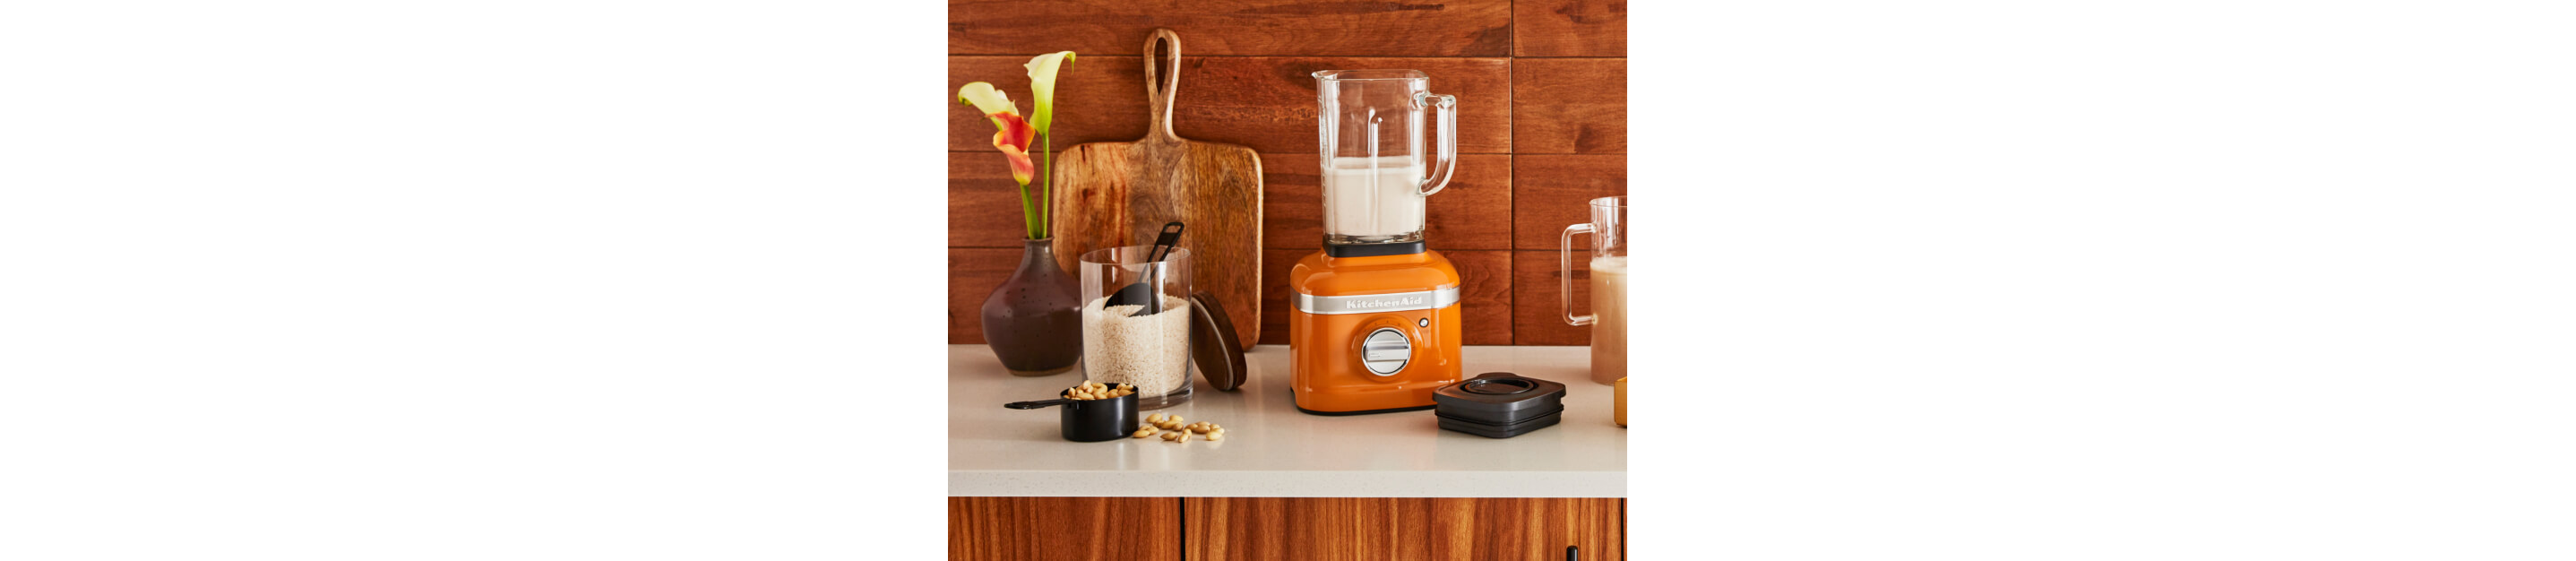 KitchenAid® Blender in honing tegen een houten backsplash